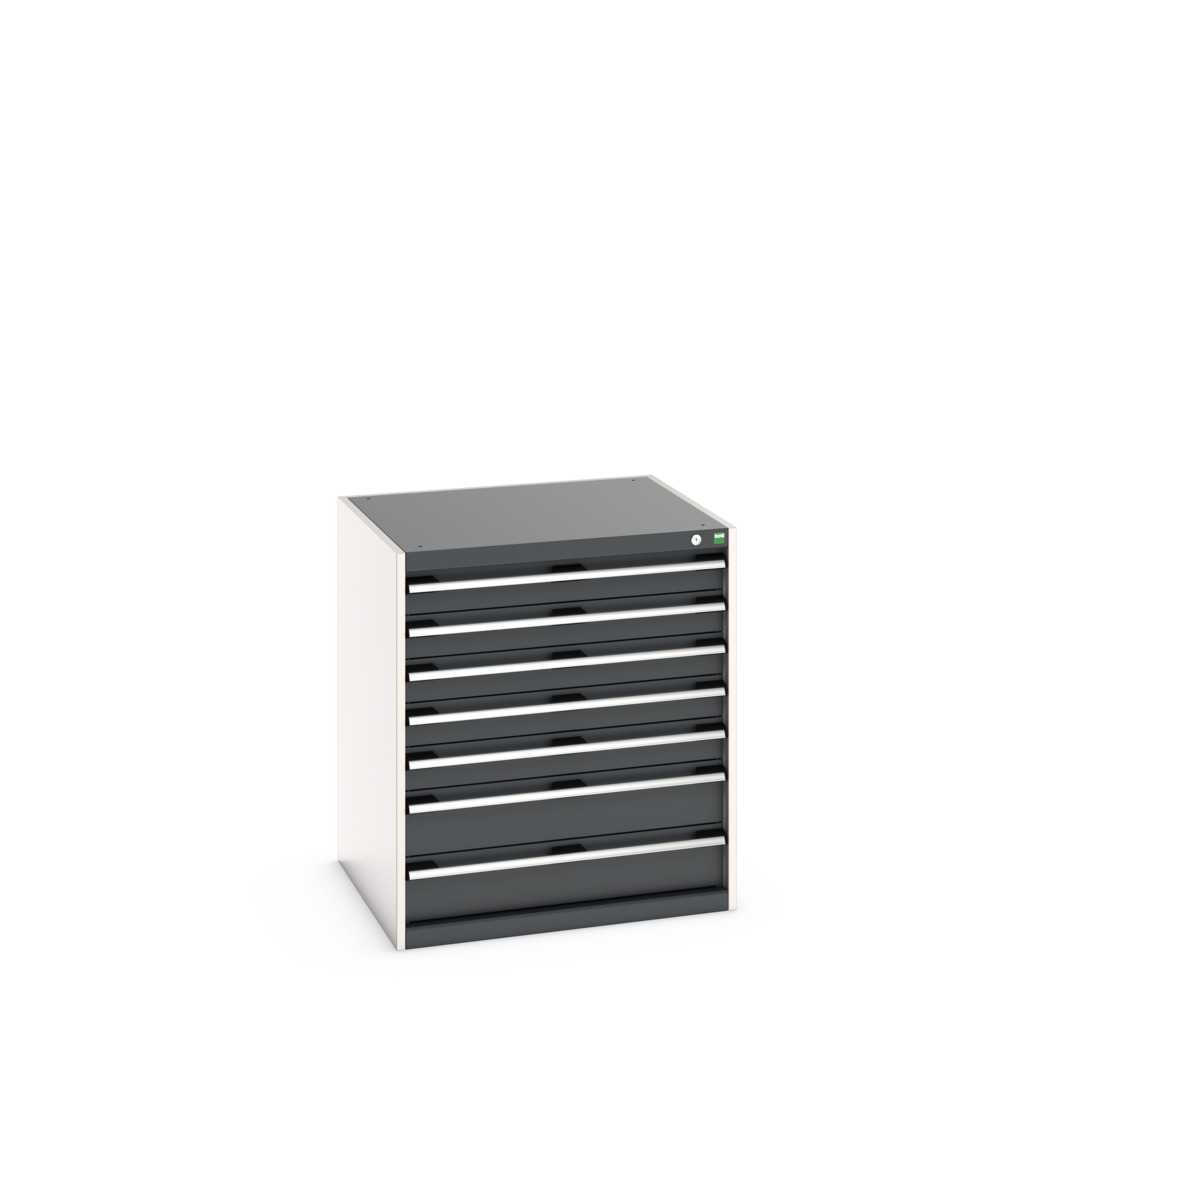 40028108. - cubio drawer cabinet